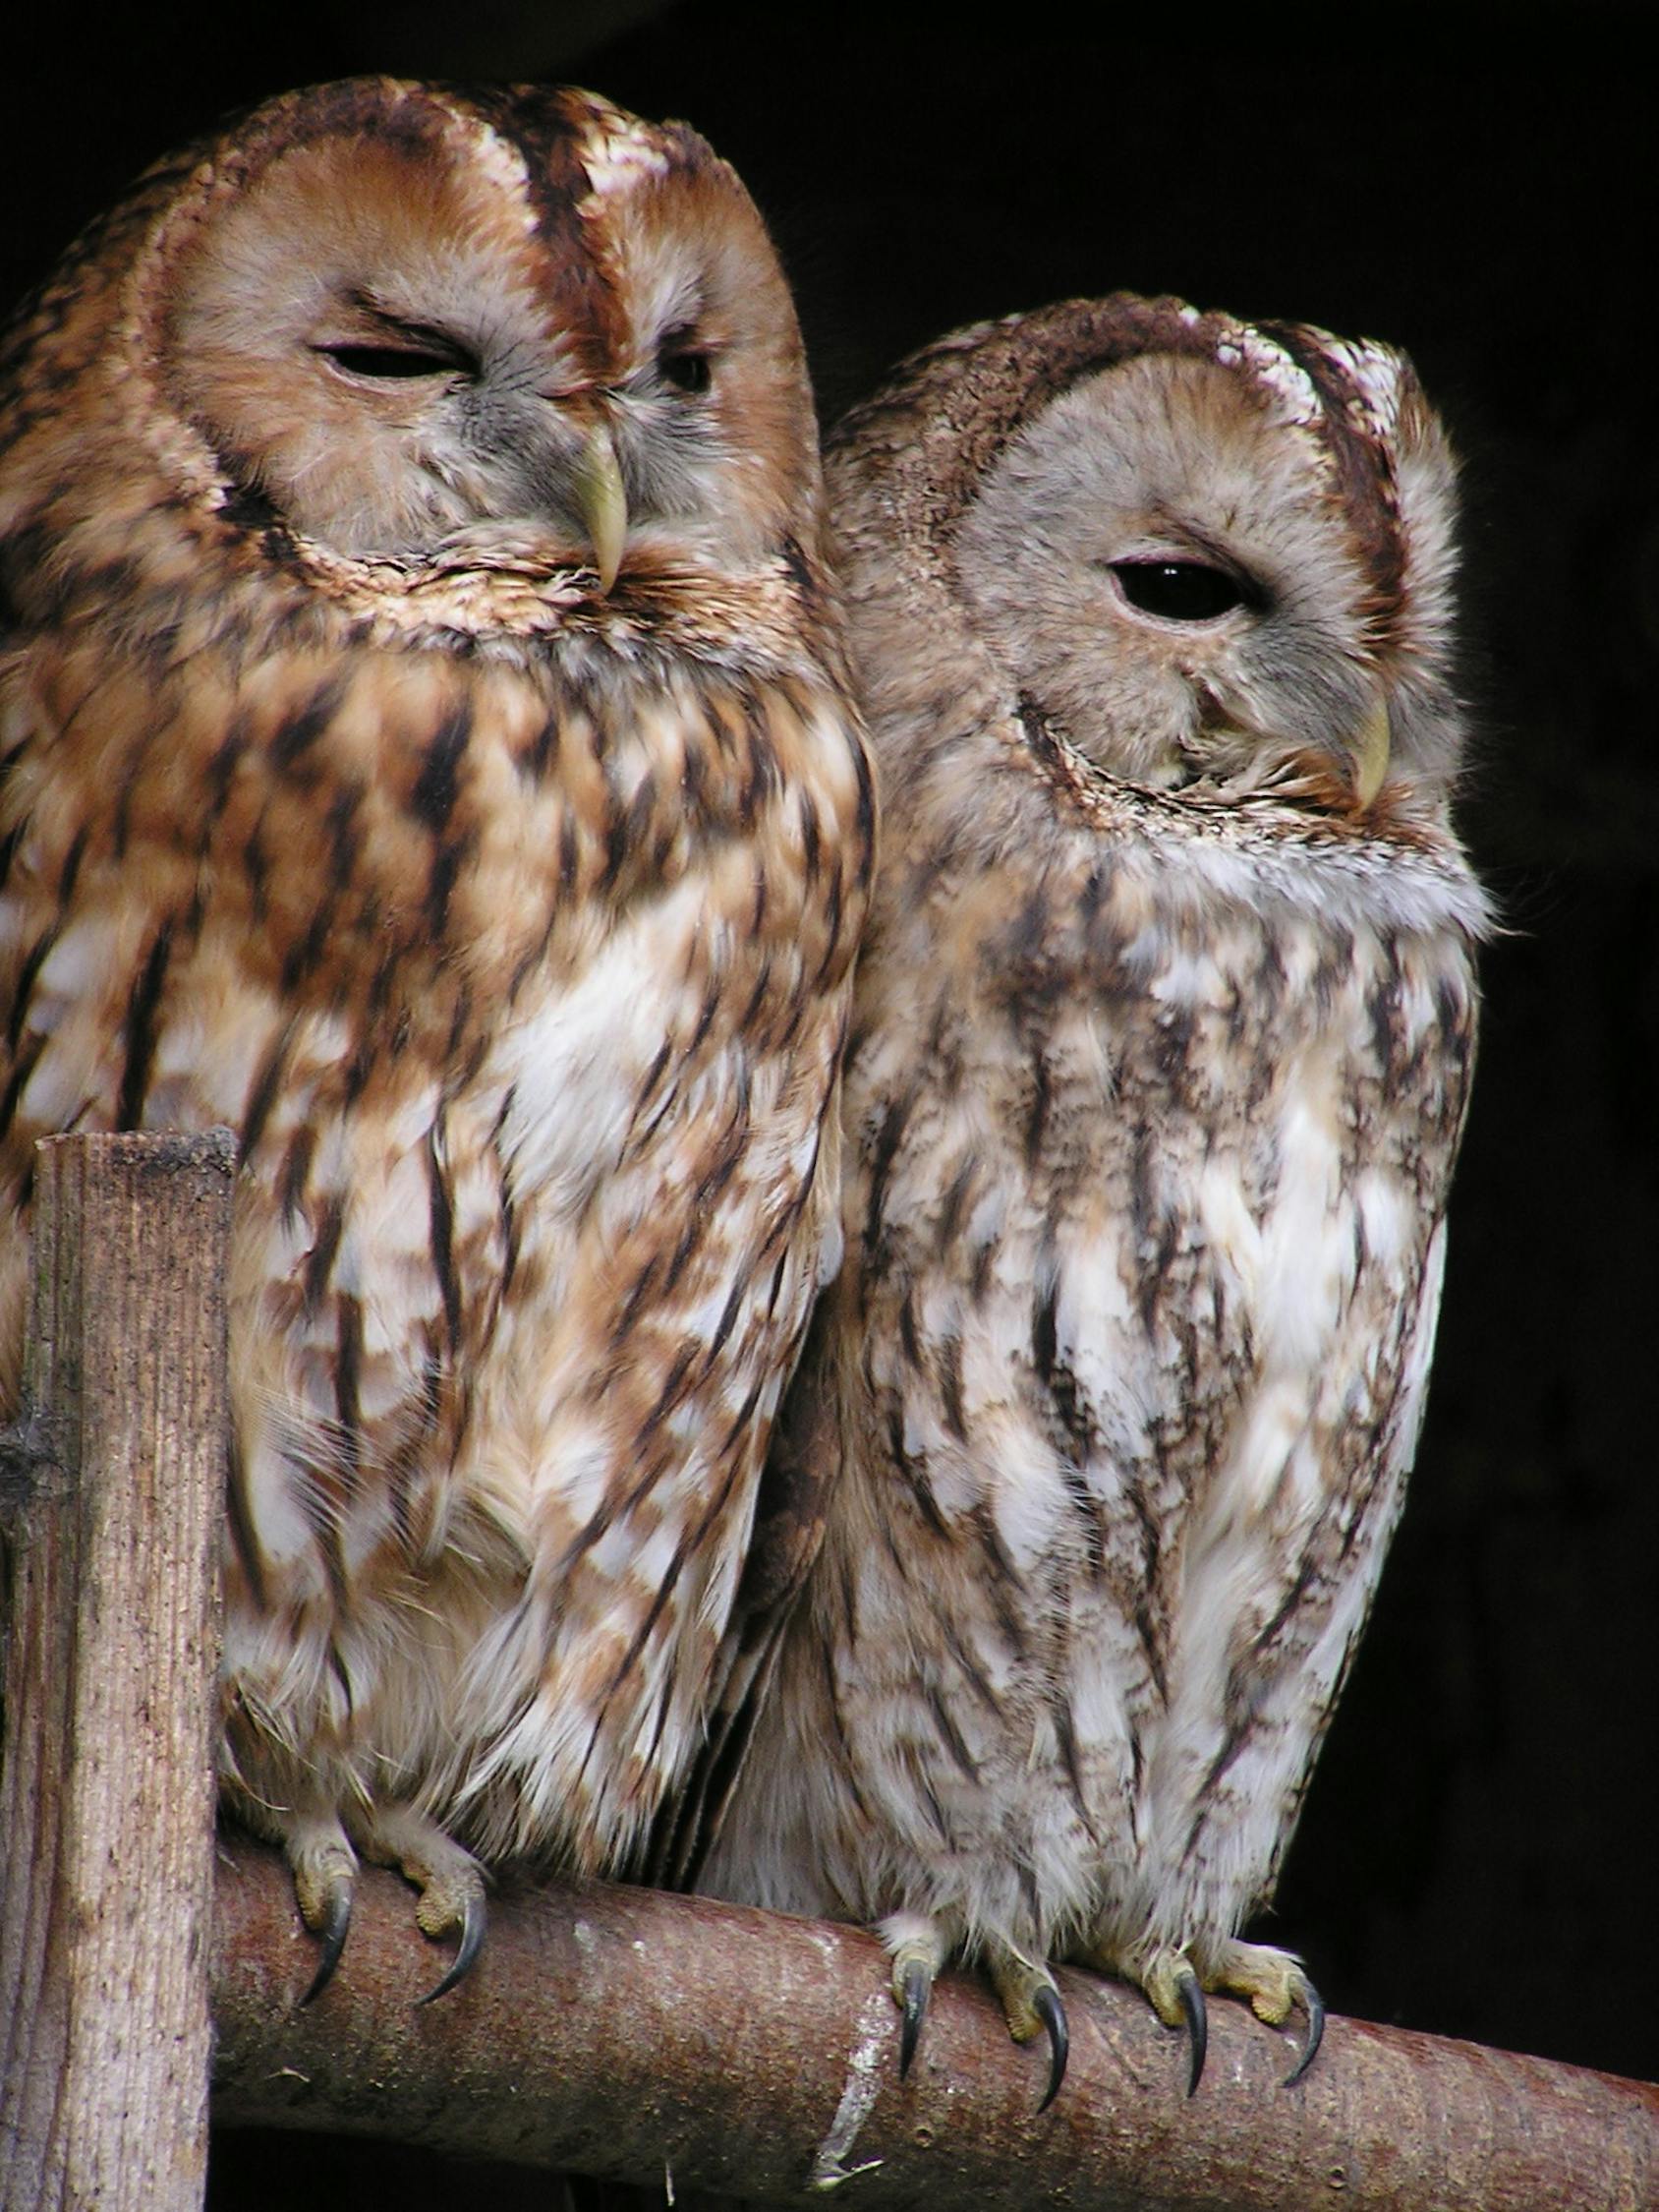 https://images.pexels.com/photos/66904/tawny-owl-owl-bird-birds-66904.jpeg?auto=compress&cs=tinysrgb&dpr=3&h=750&w=1260